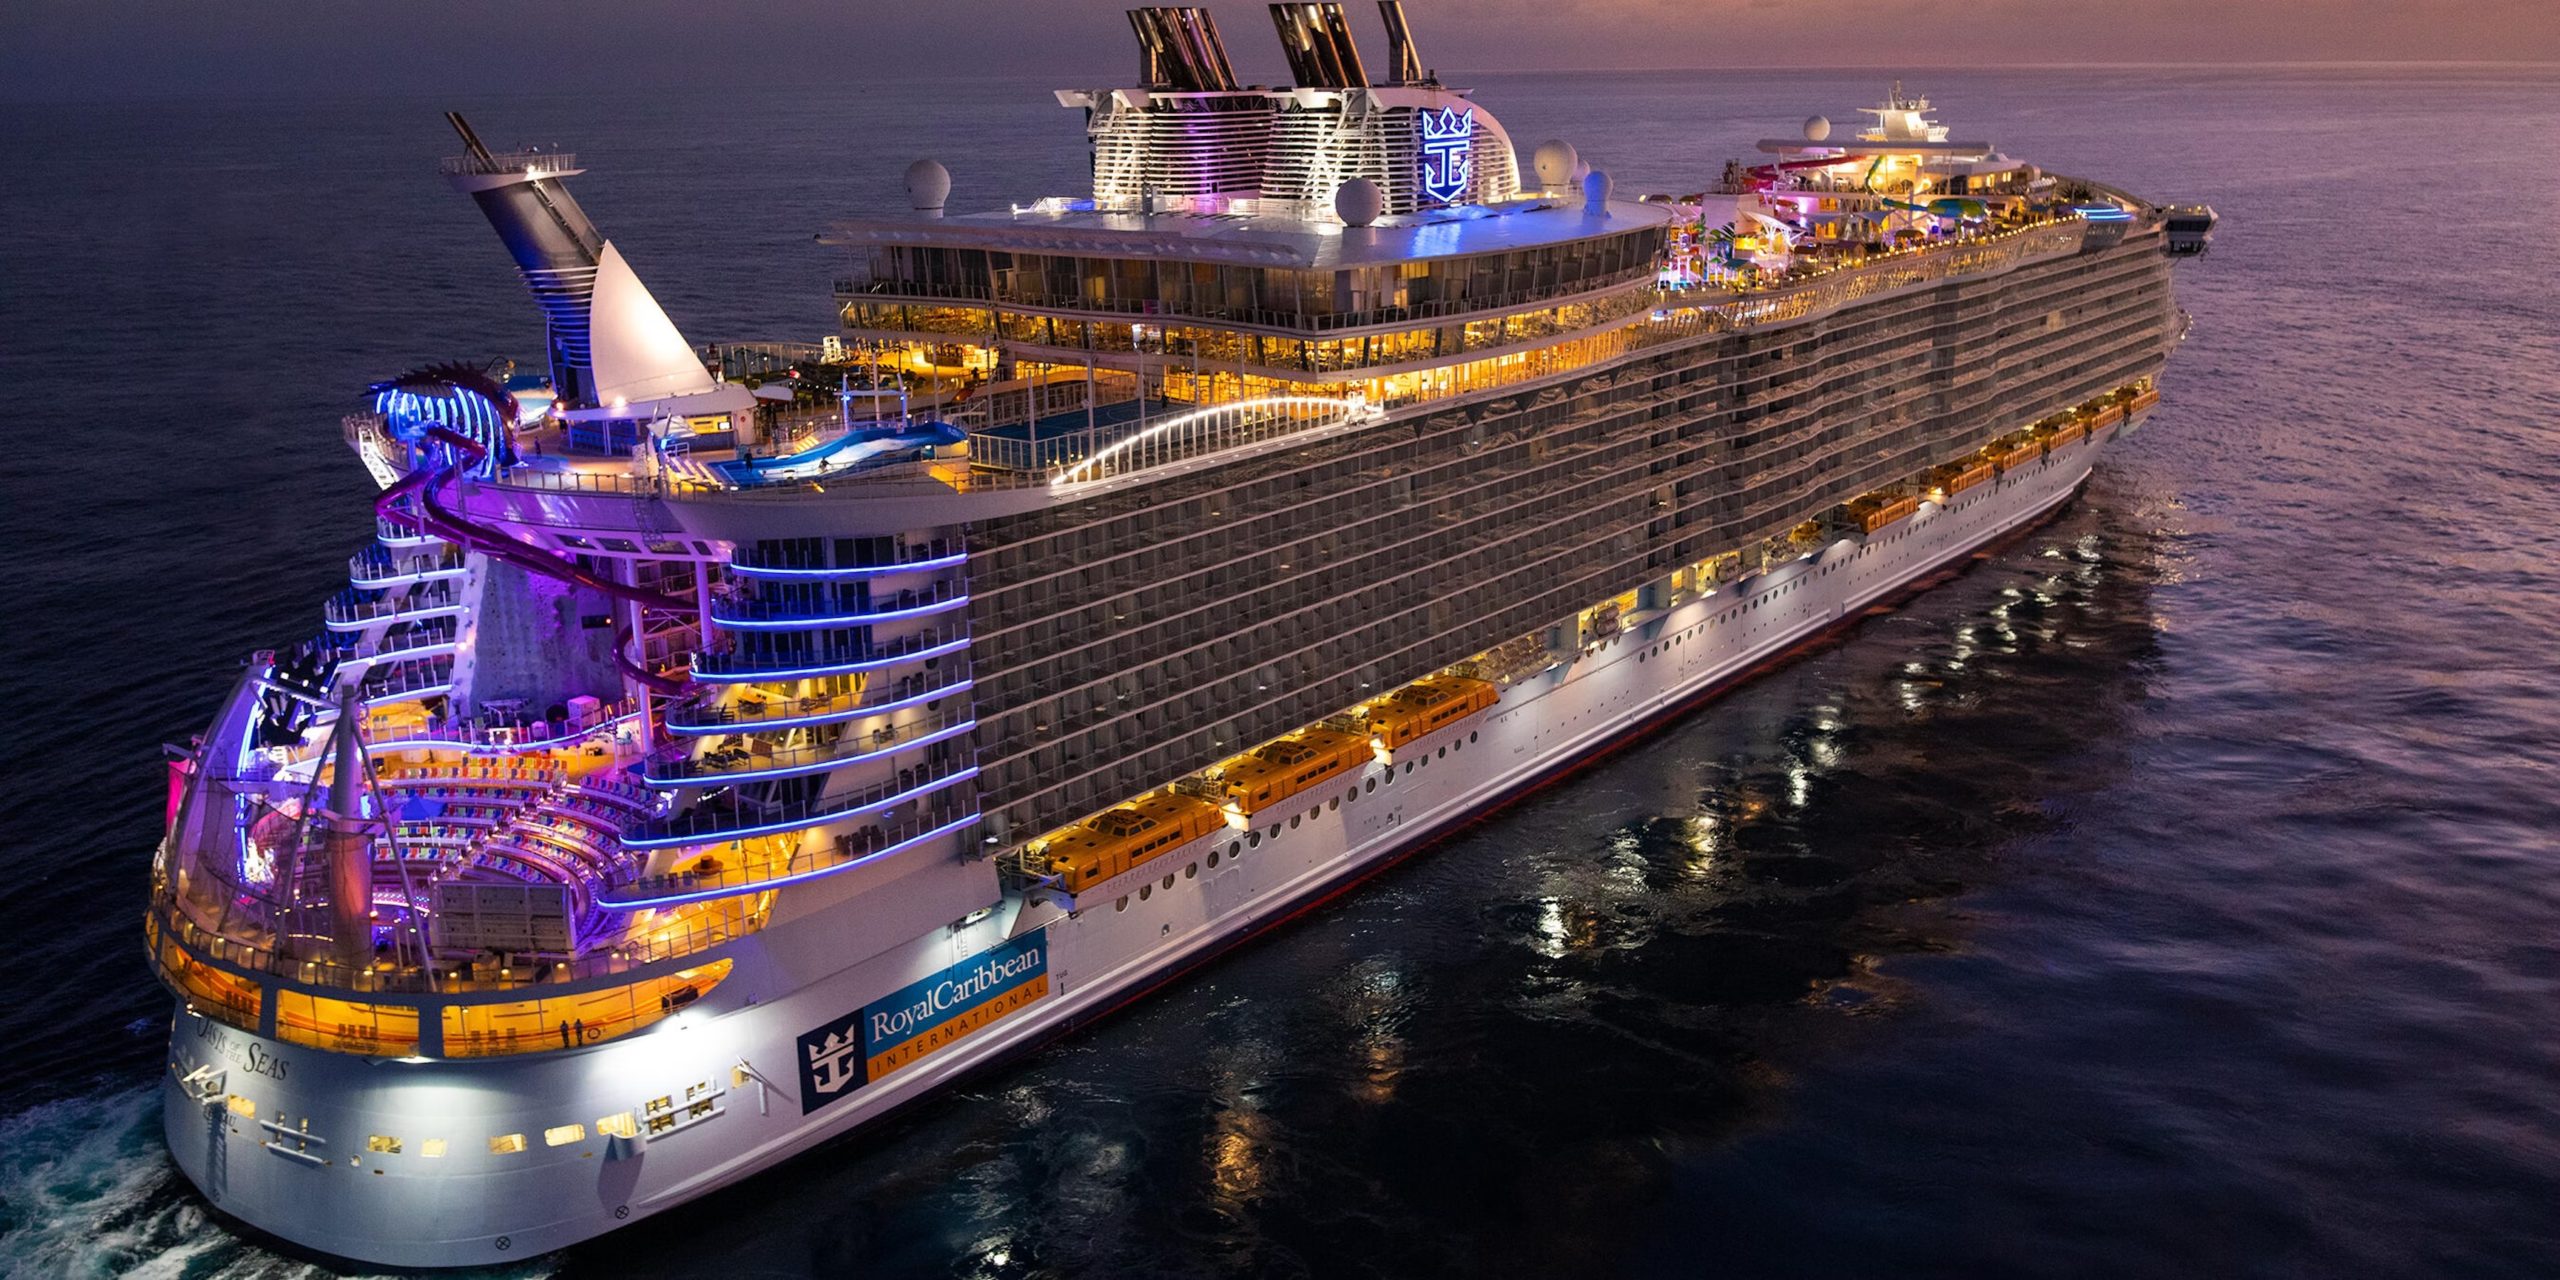 A Royal Caribbean cruise ship